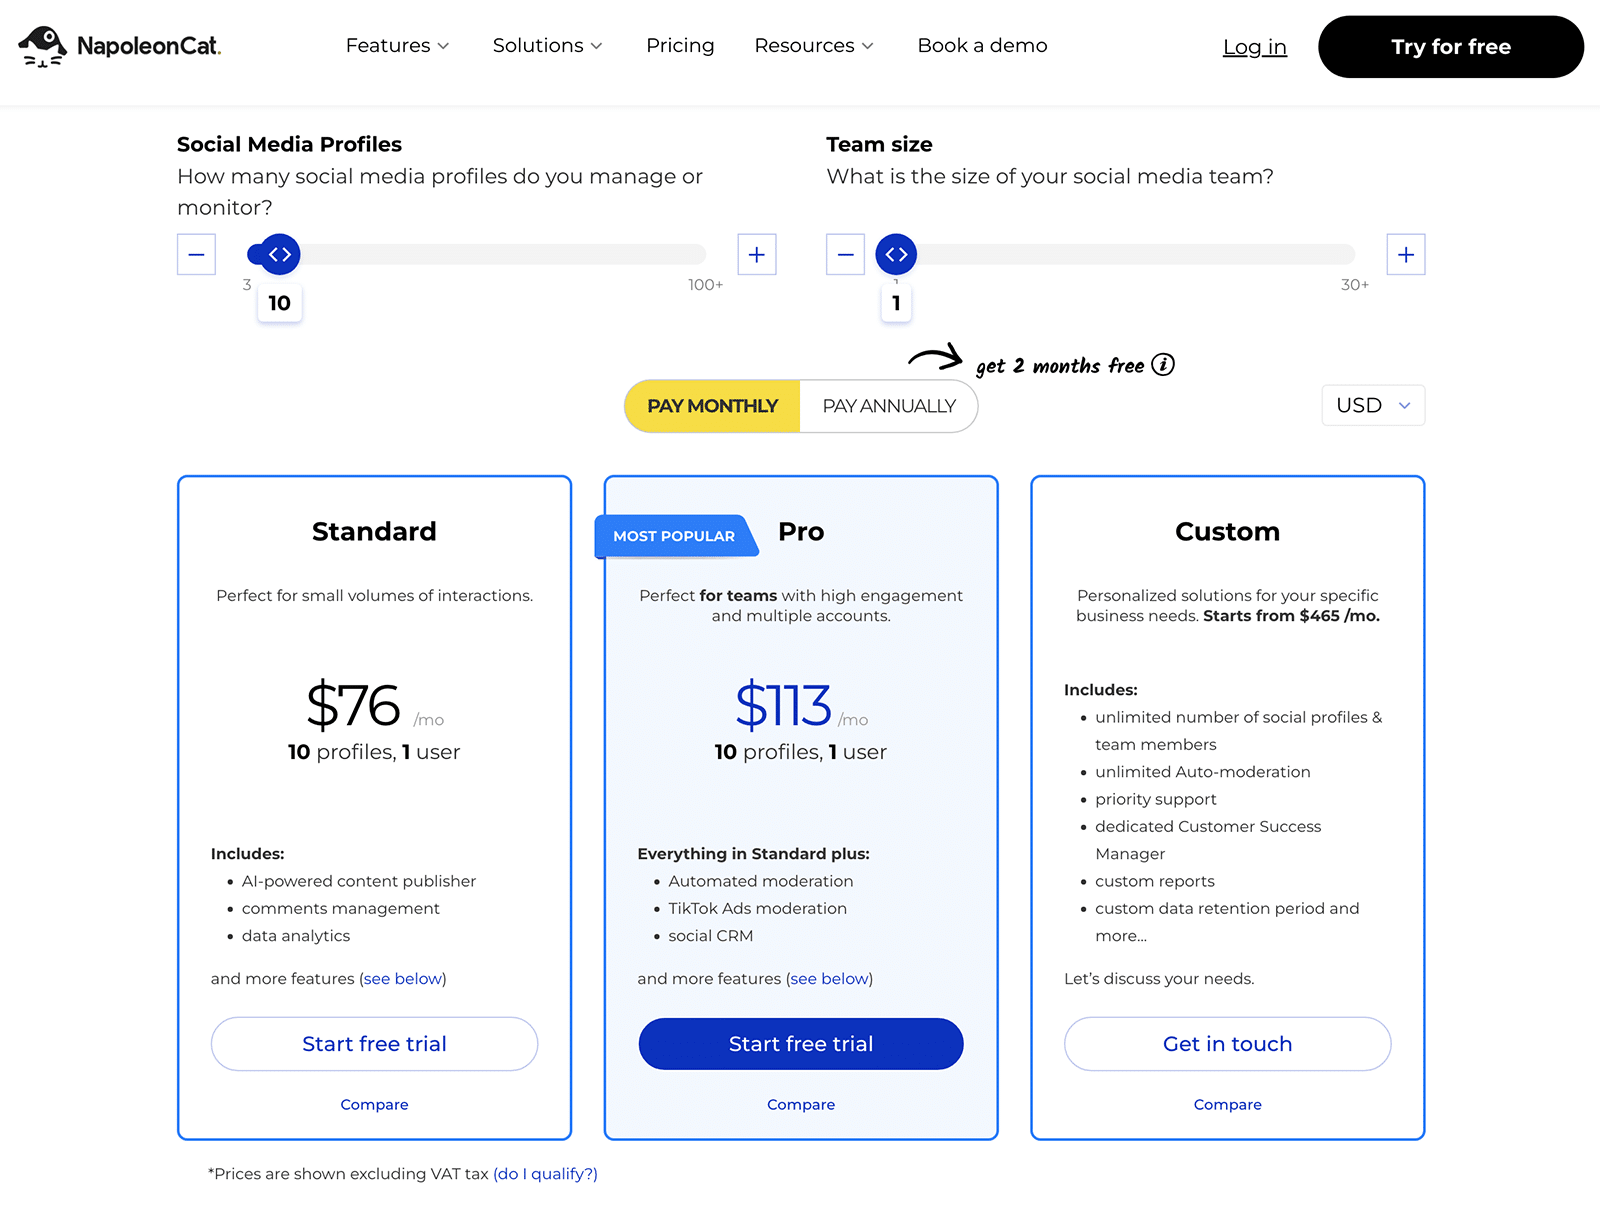 NapoleonCat pricing for 10 profiles